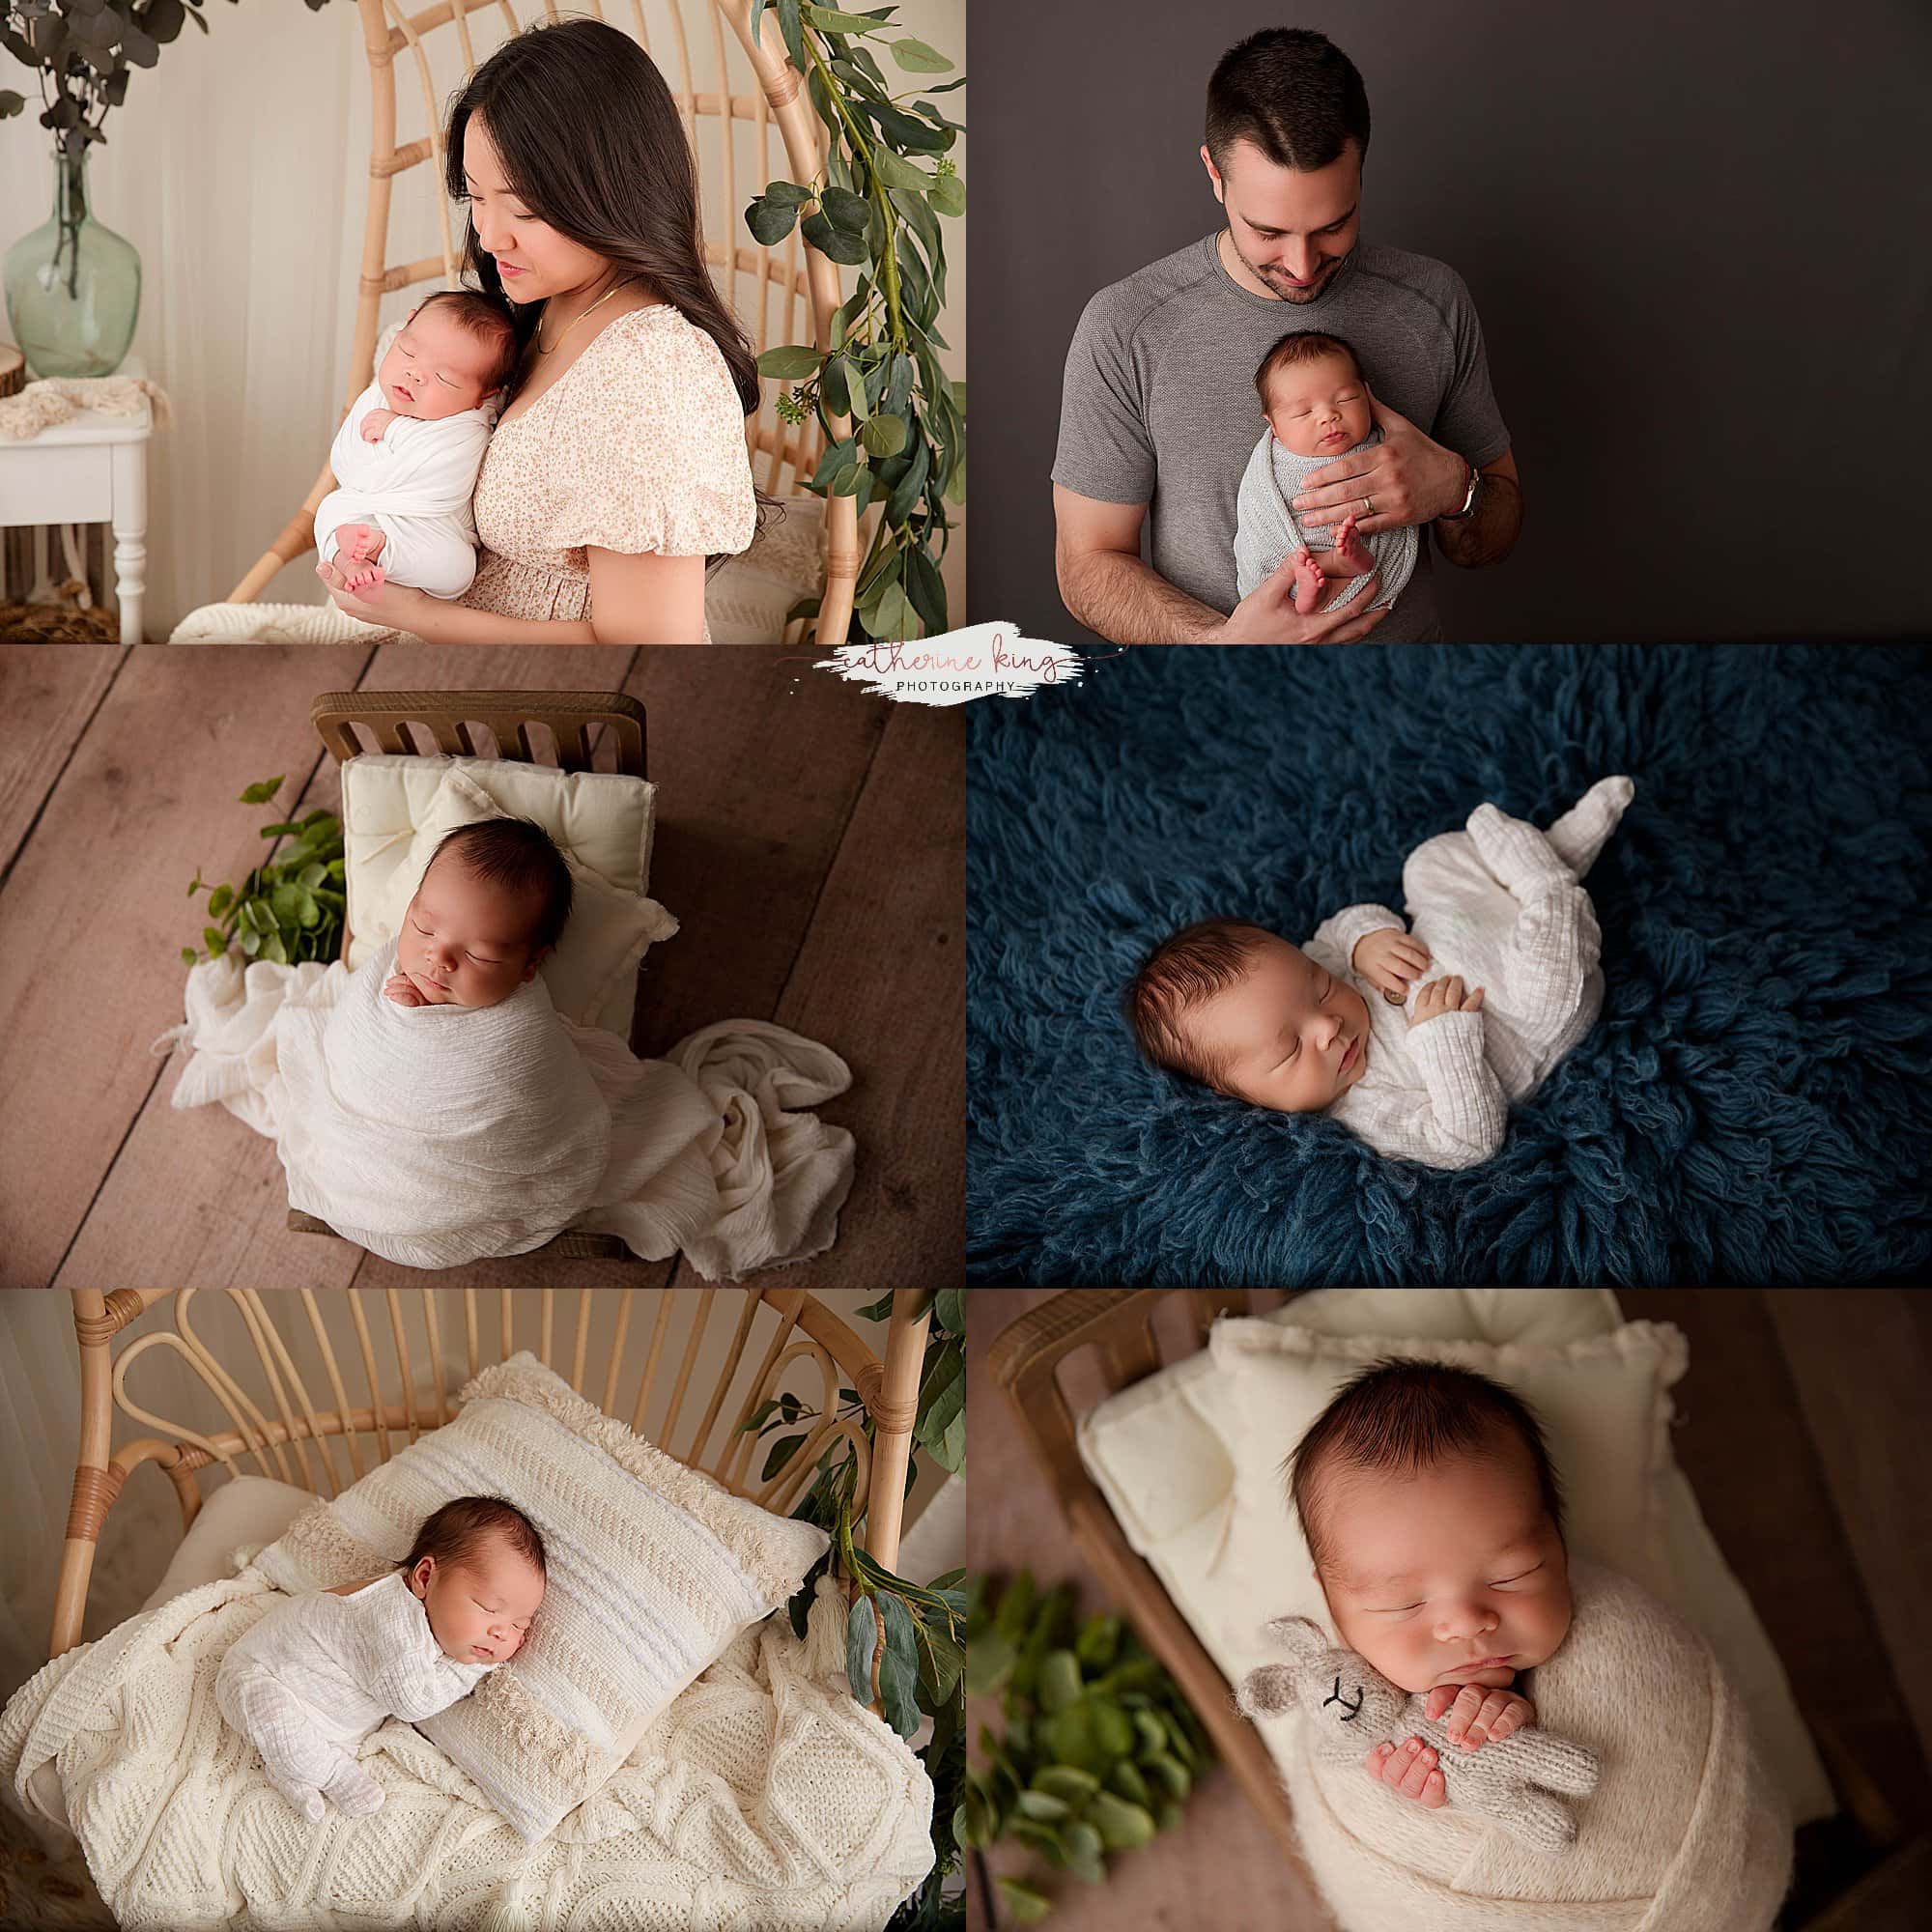 Why newborn photography?